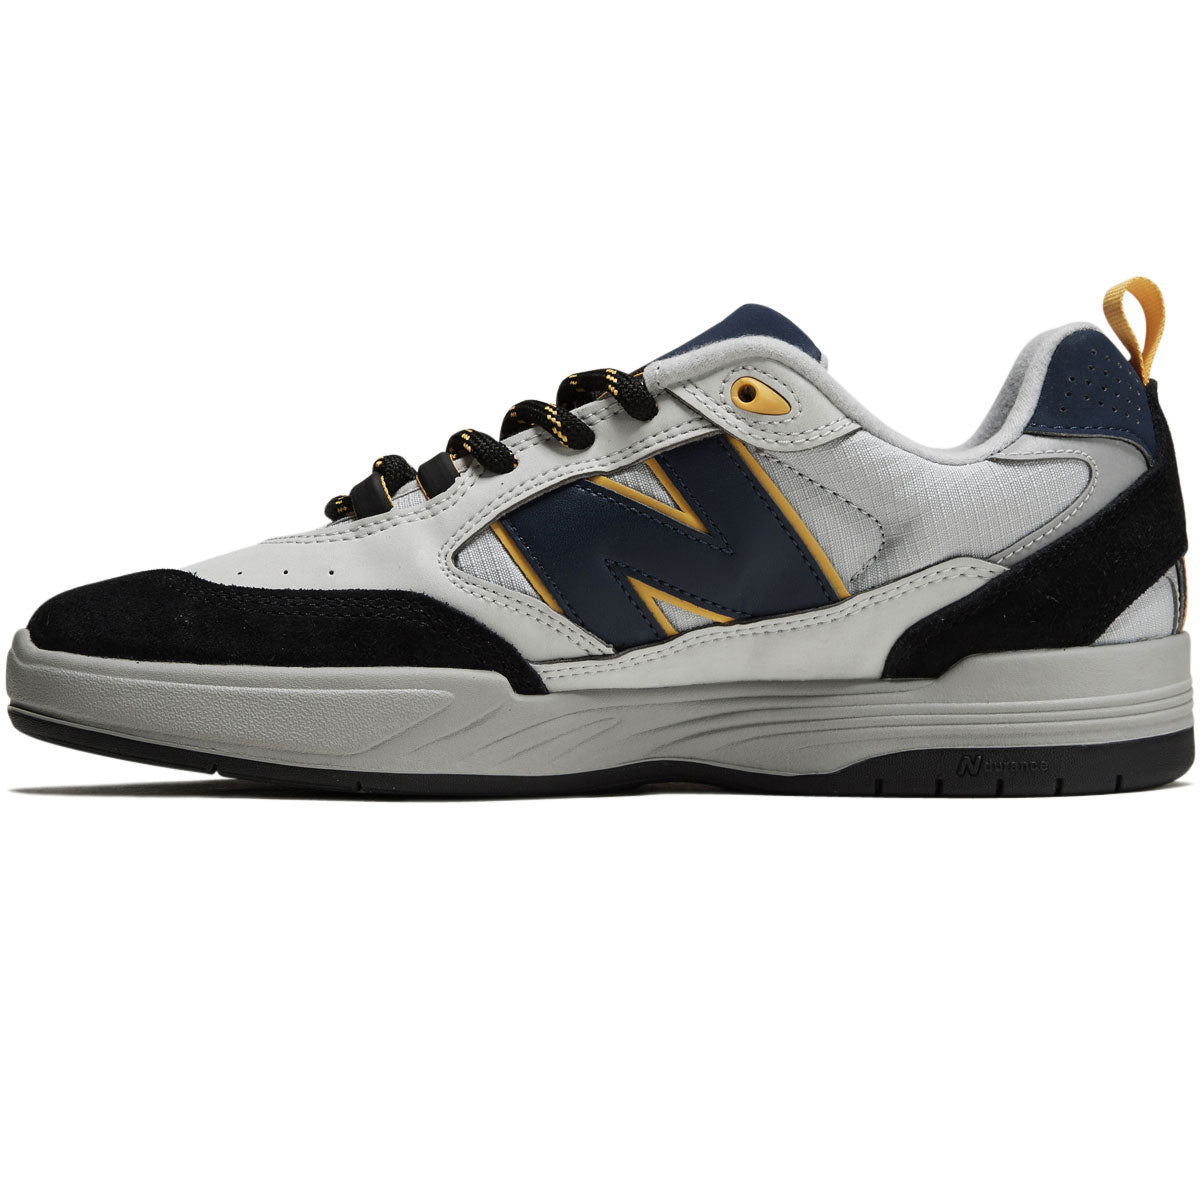 New Balance 808 Tiago Shoes - Grey/Black image 2